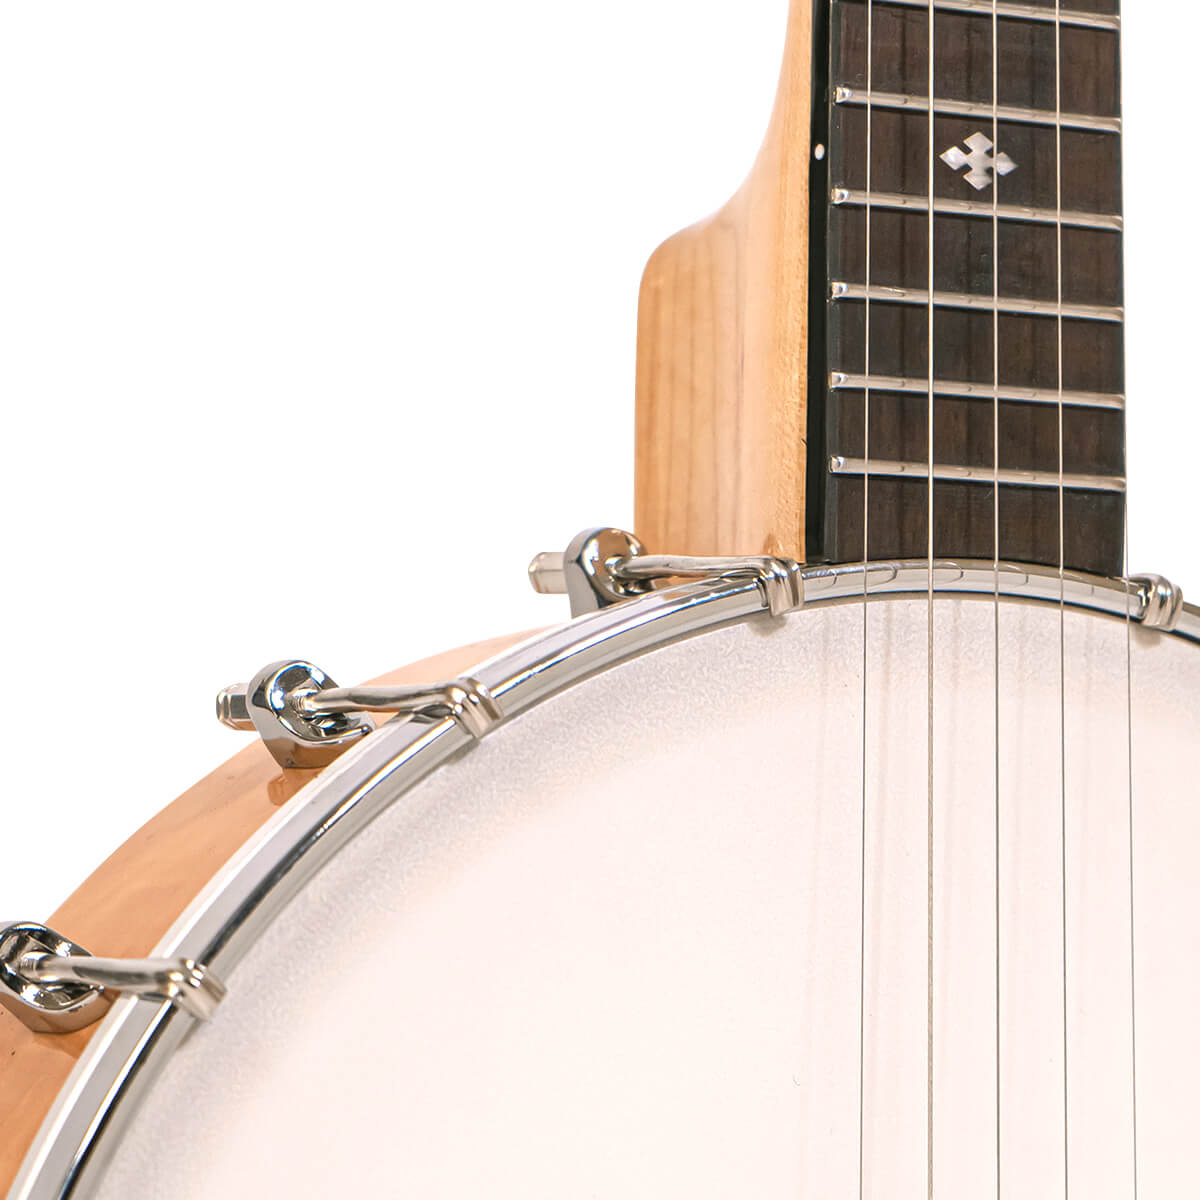 Gold Tone Cripple Creek Banjo, CC-100 Banjos Gold Tone   